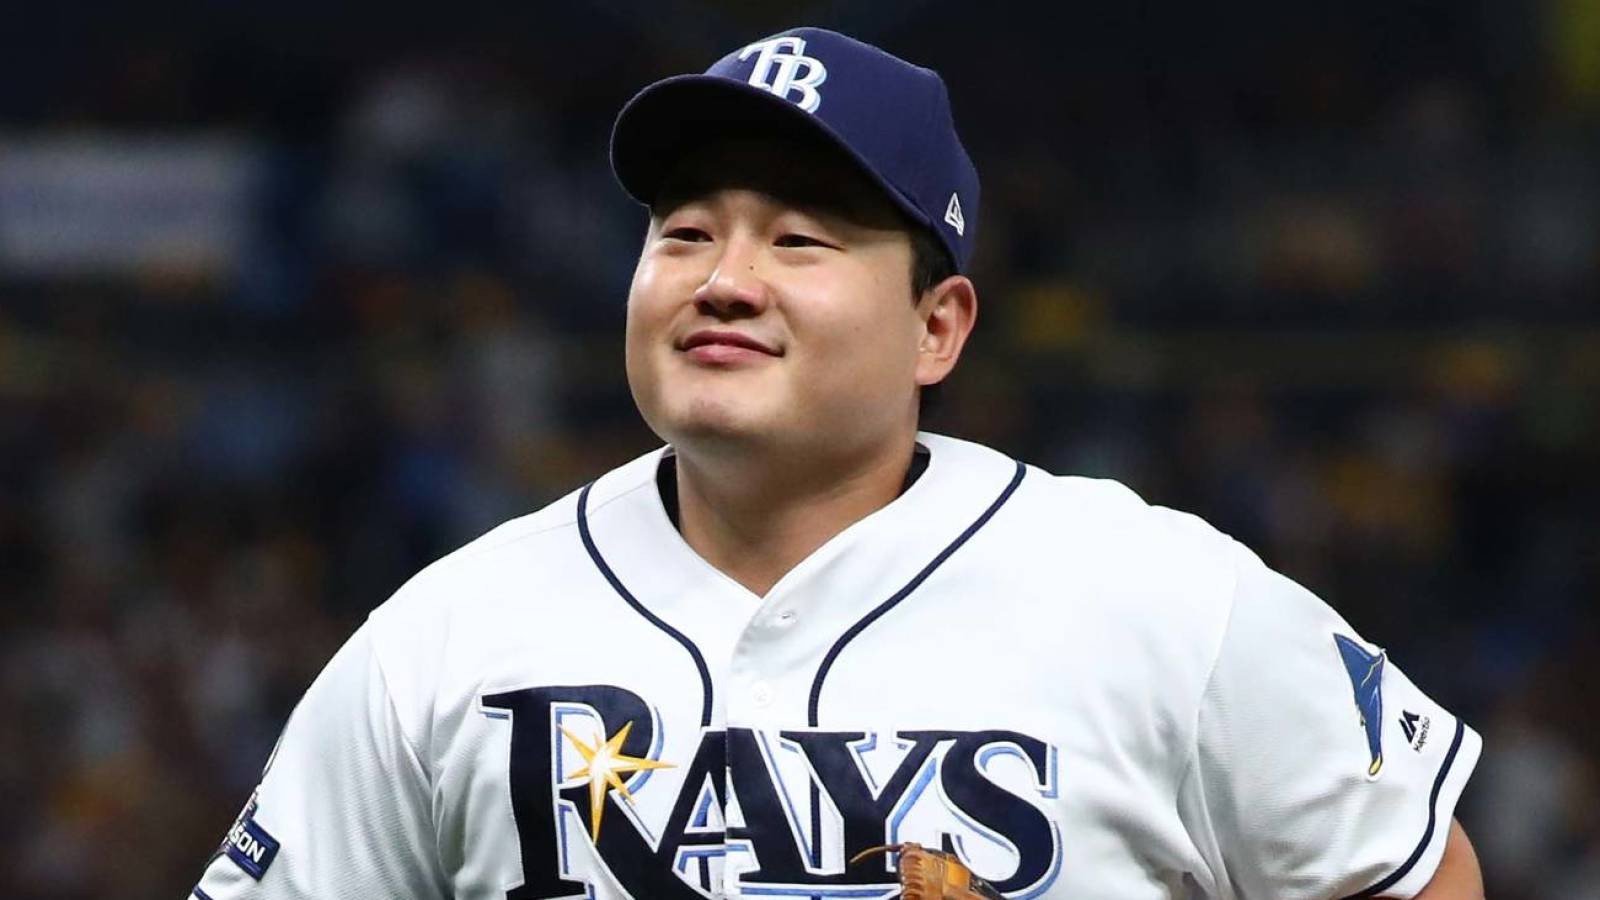 Ji-Man Choi Shirt - Choi To The World, Tampa Bay, MLBPA - BreakingT